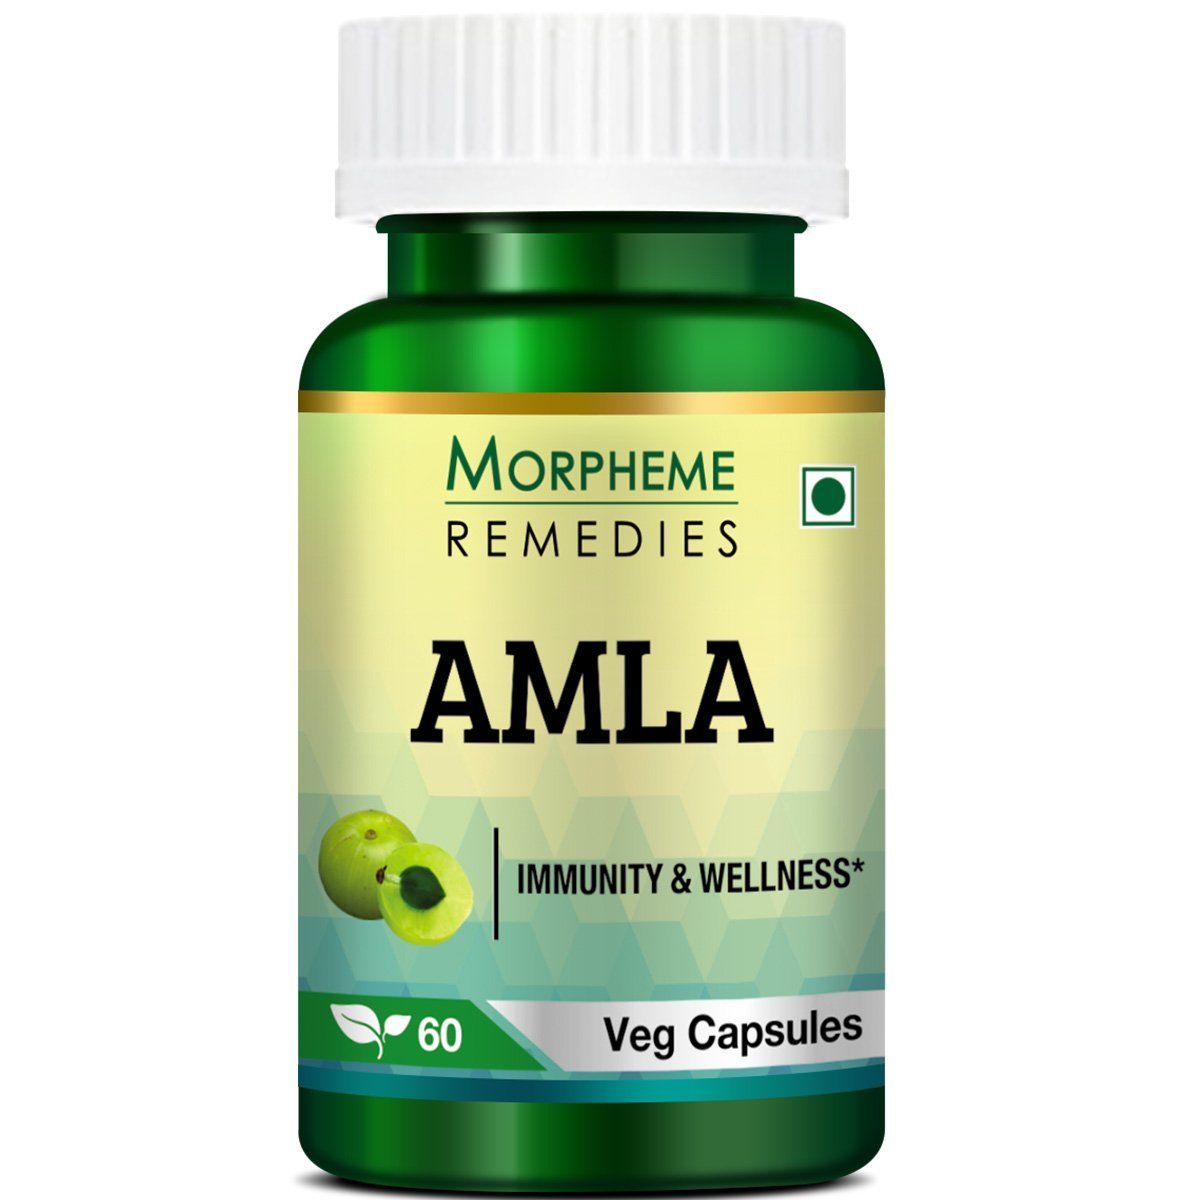 Morpheme Remedies Amla Image